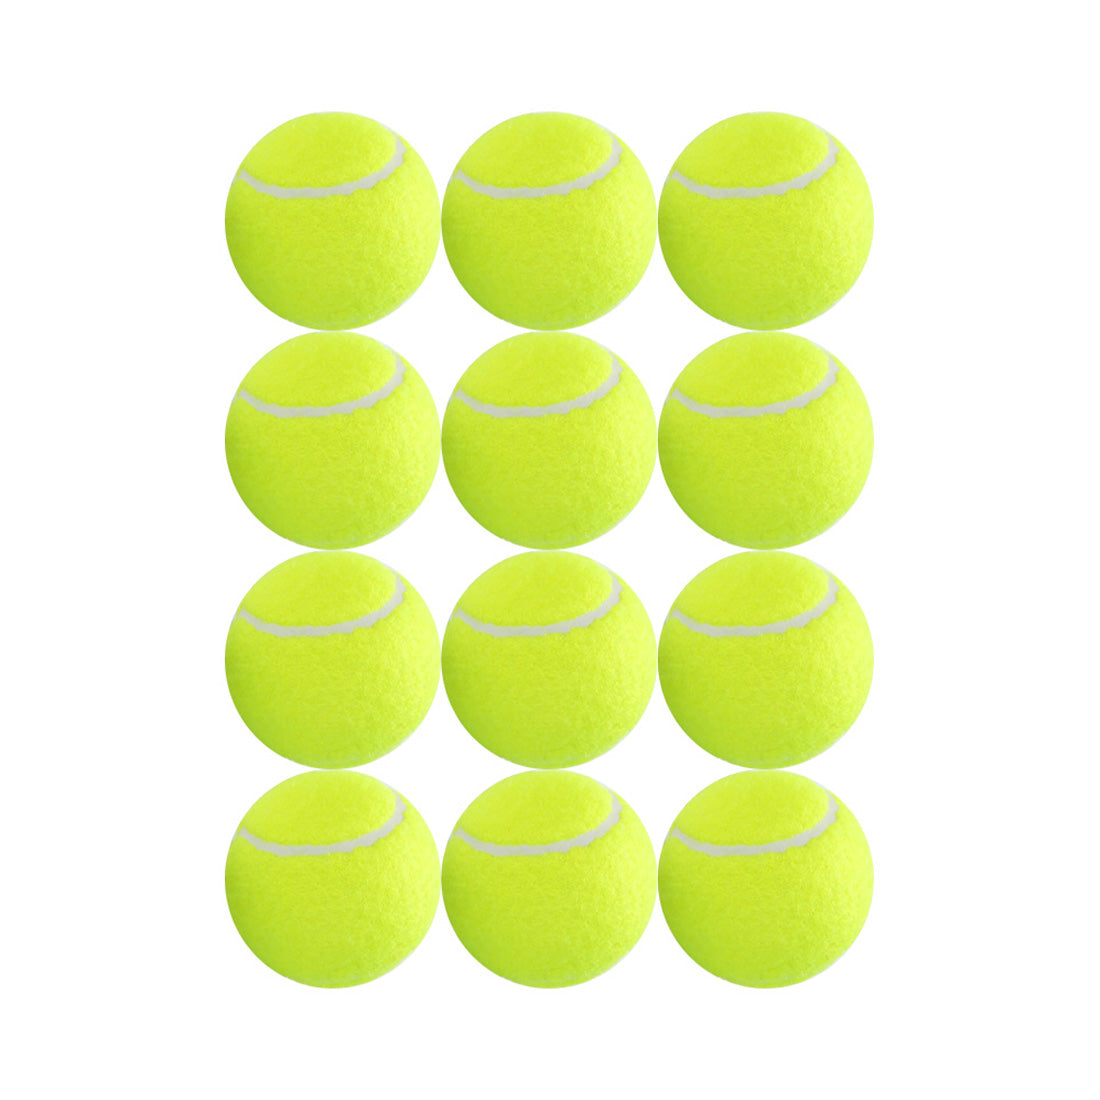 12-Pack Standard Pressure Training Tennis Balls, Highly Elasticity, More Durable, Good for Beginner Training Ball